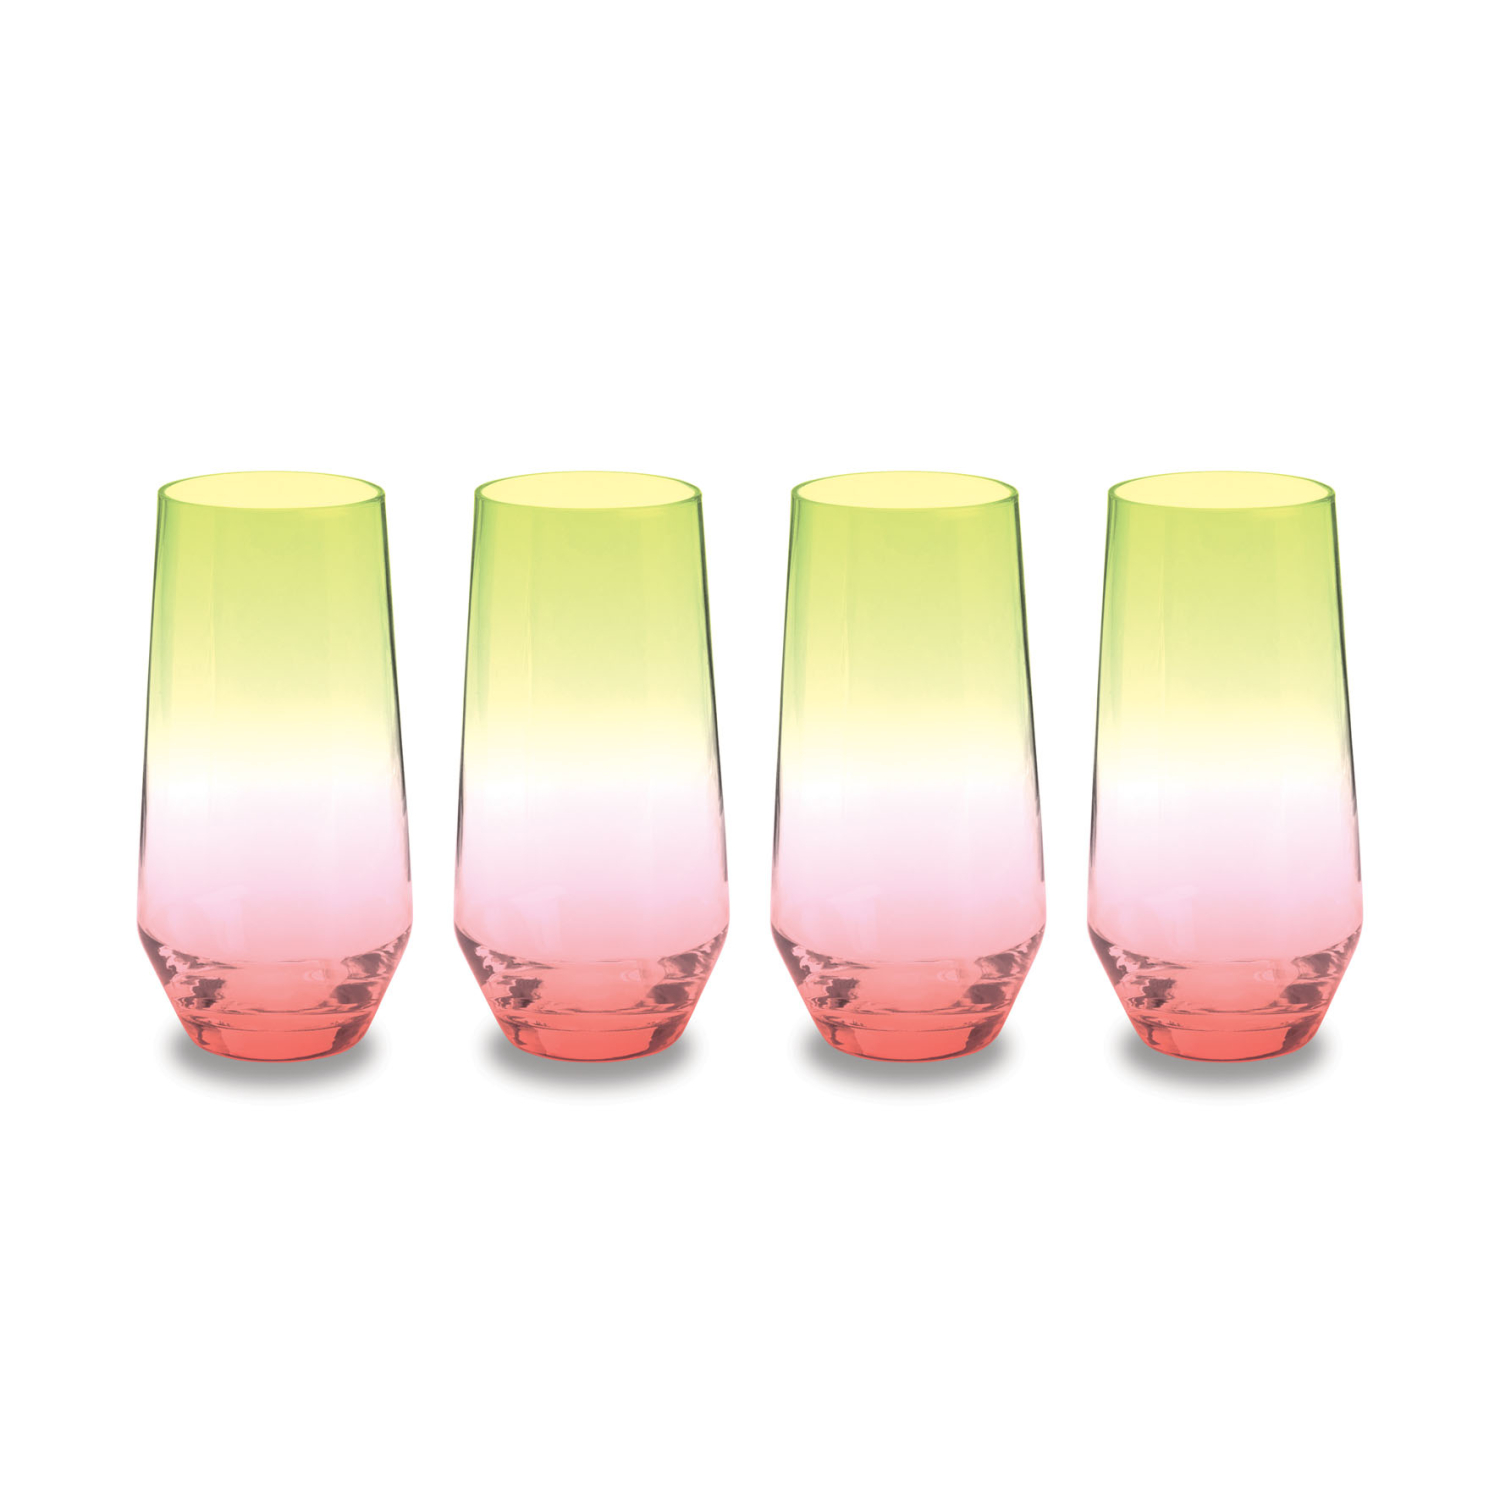 Zesty Life Highball S / 4, Farbiges Gläserset, Longdrinkbecher 4 tlg. mit Farbverlauf